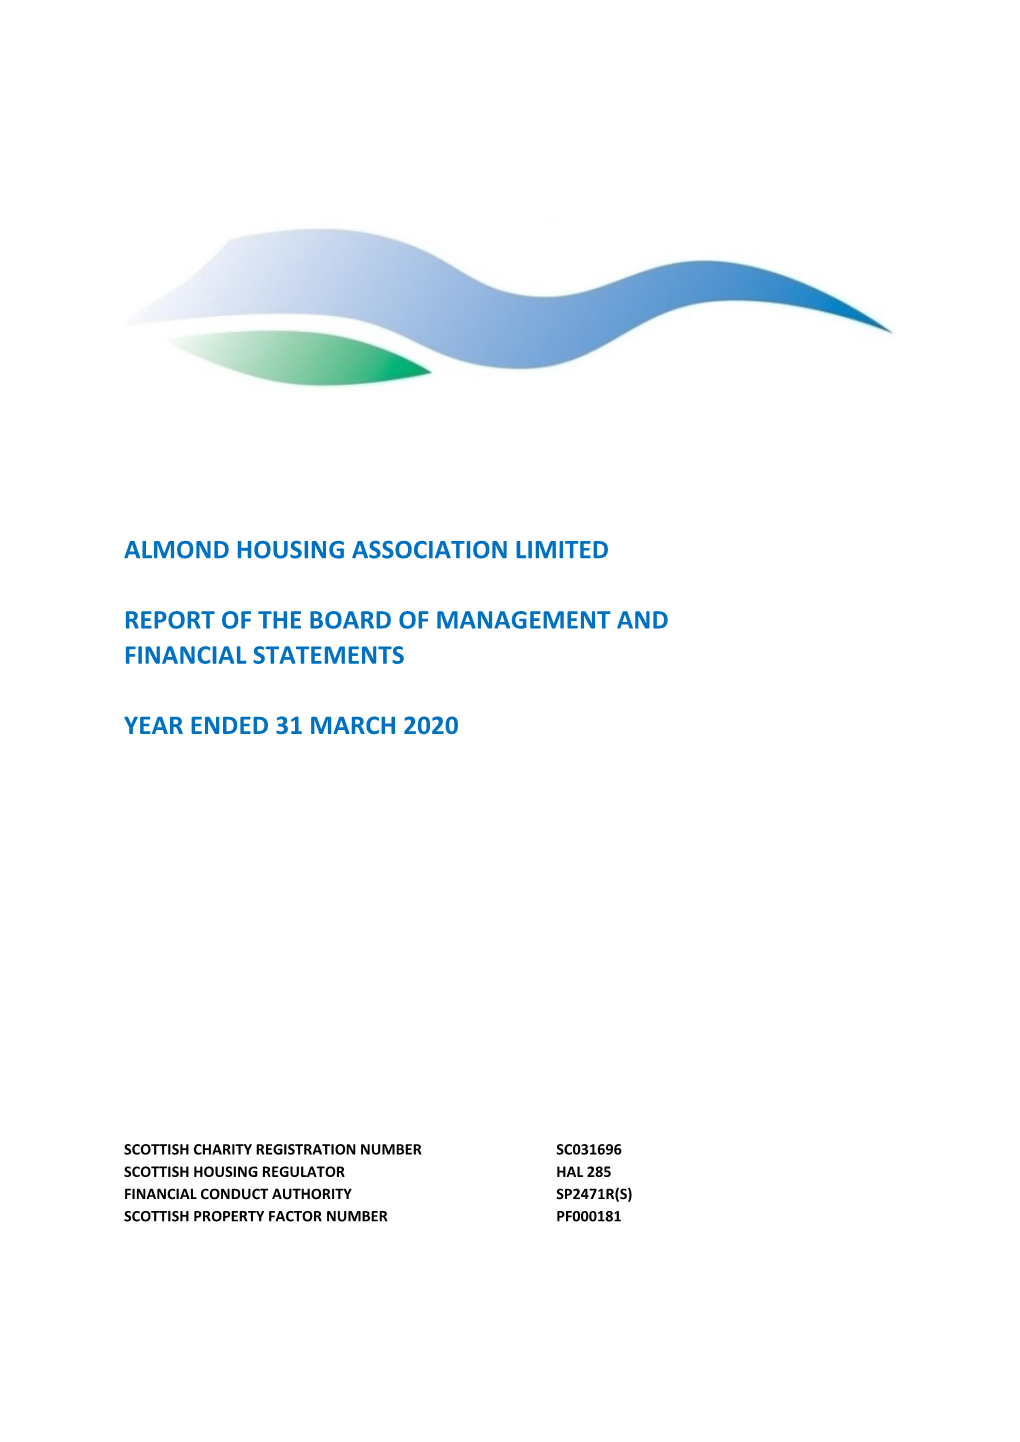 Almond Housing Association Limited